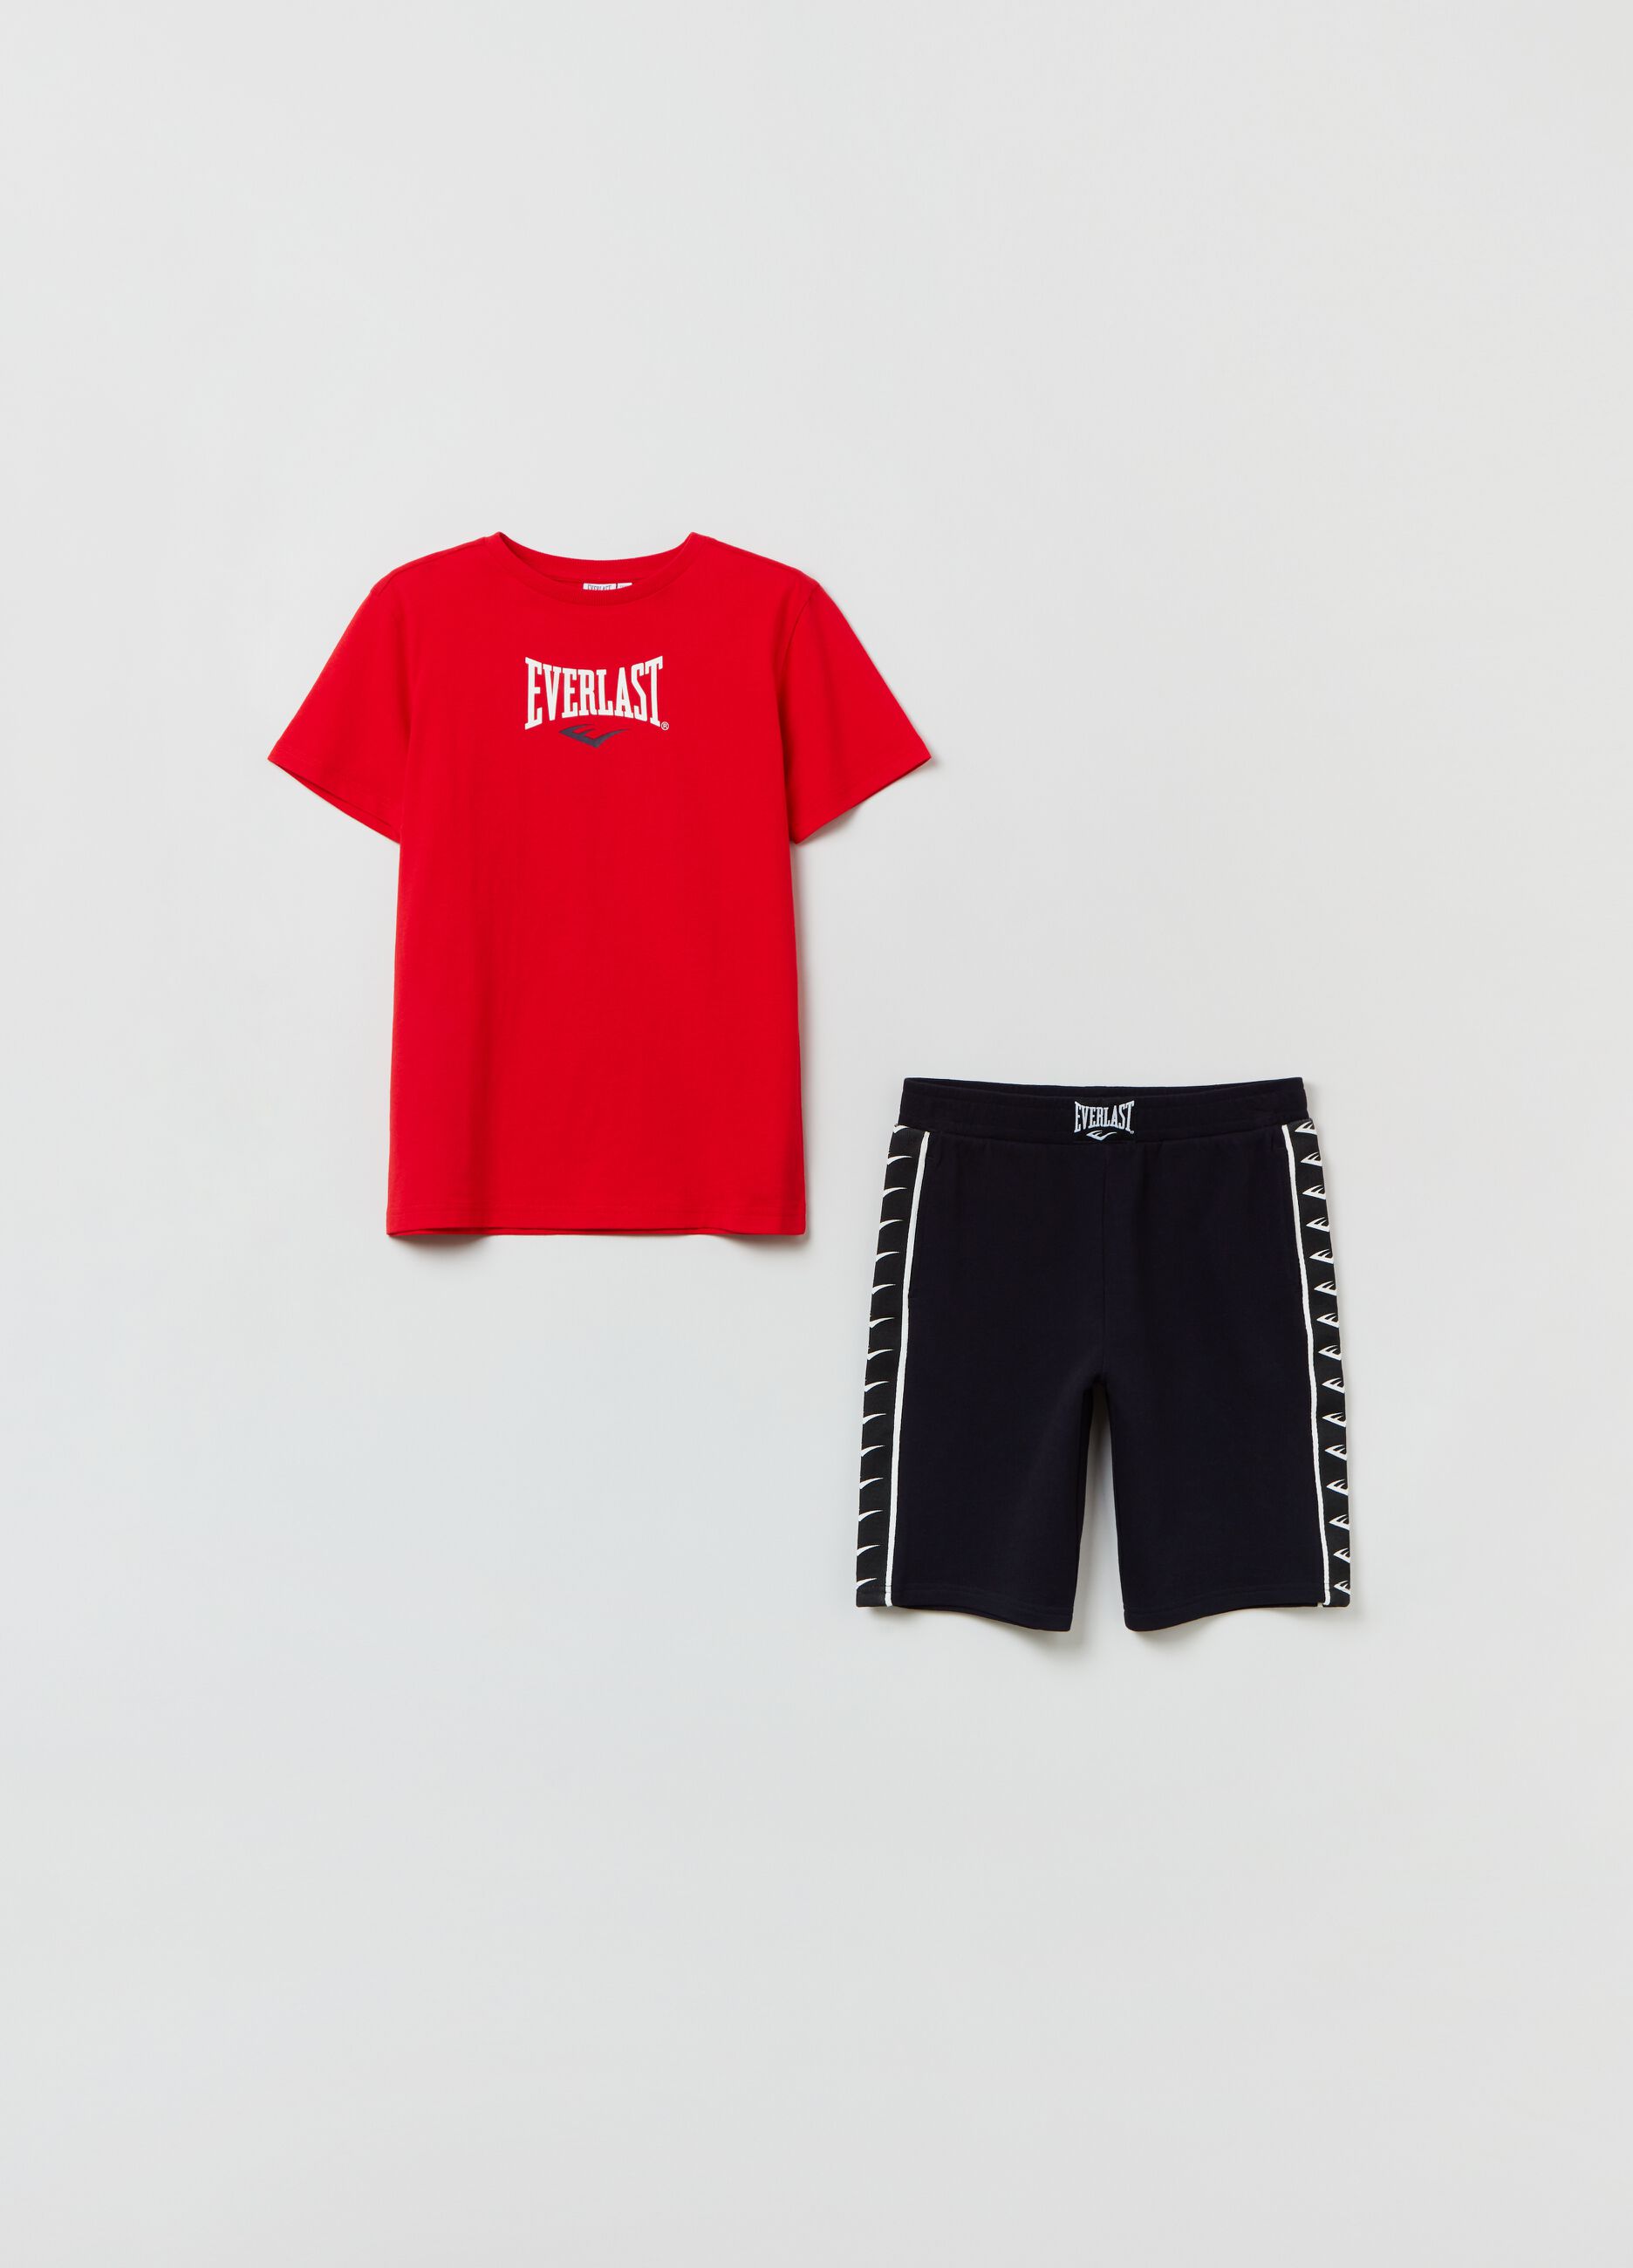 Everlast T-shirt and shorts jogging set